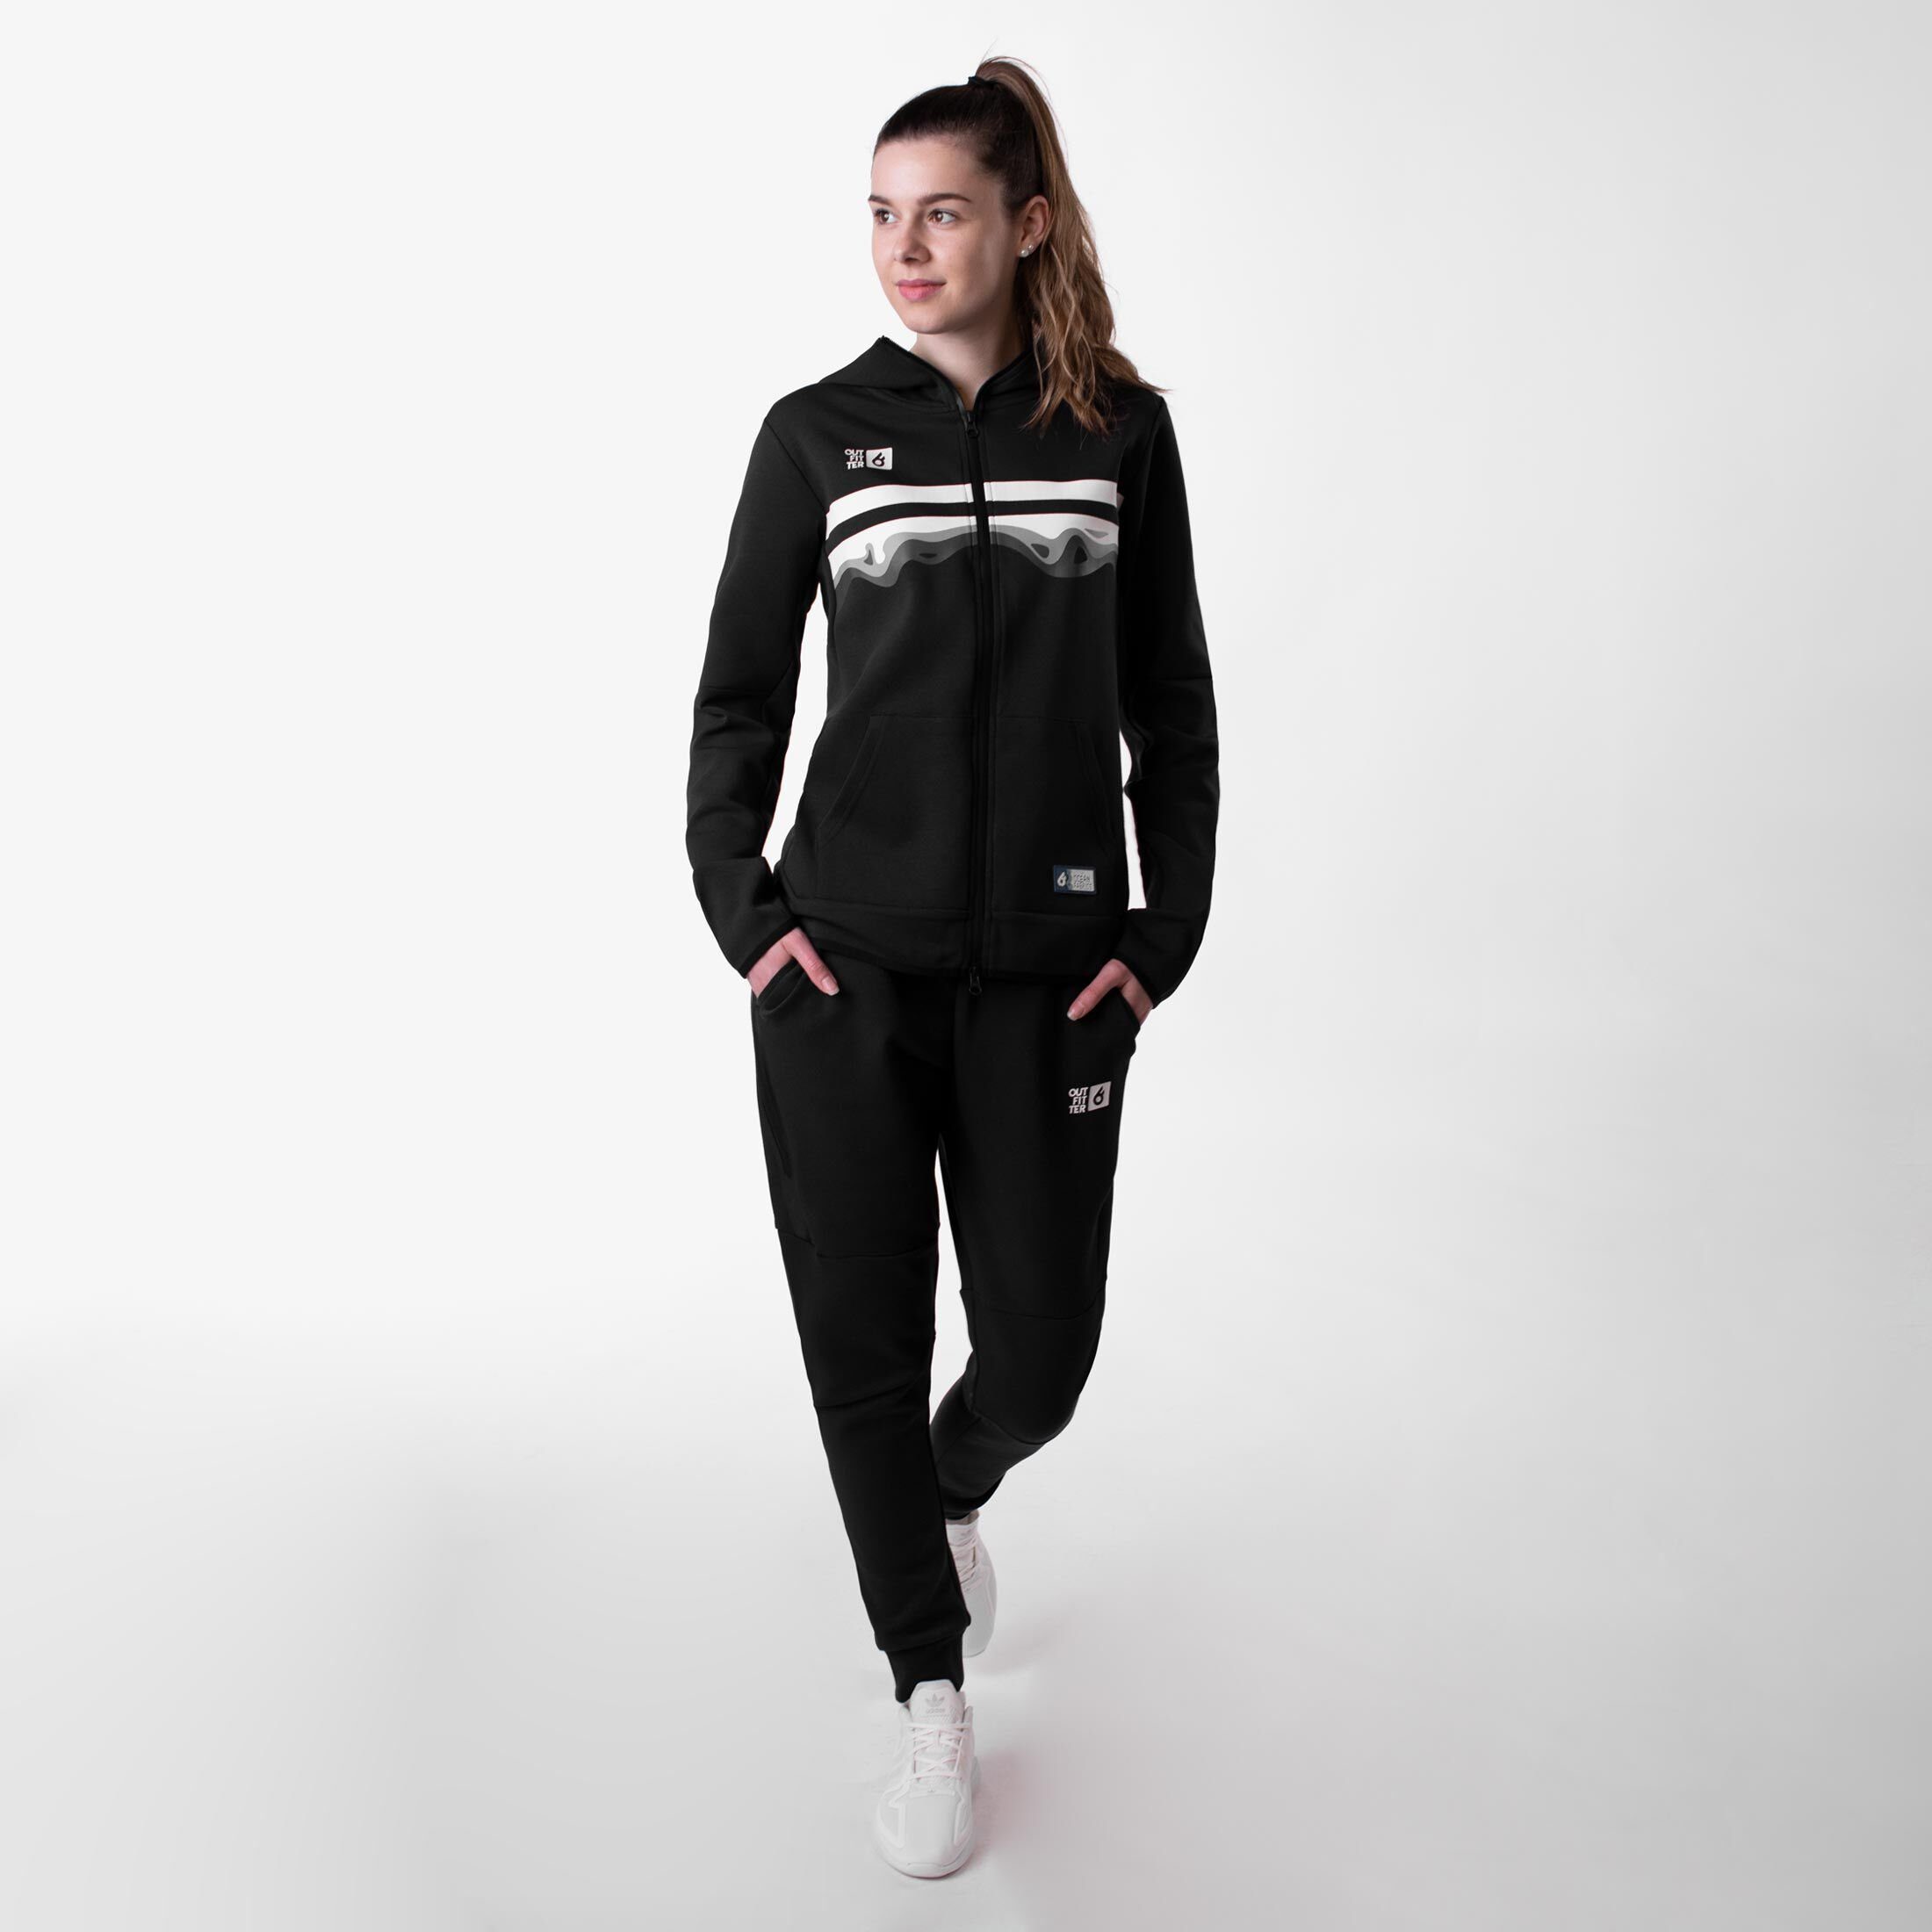 Outfitter Trainingsanzug Ocean Fabrics Jogginganzug Damen schwarz